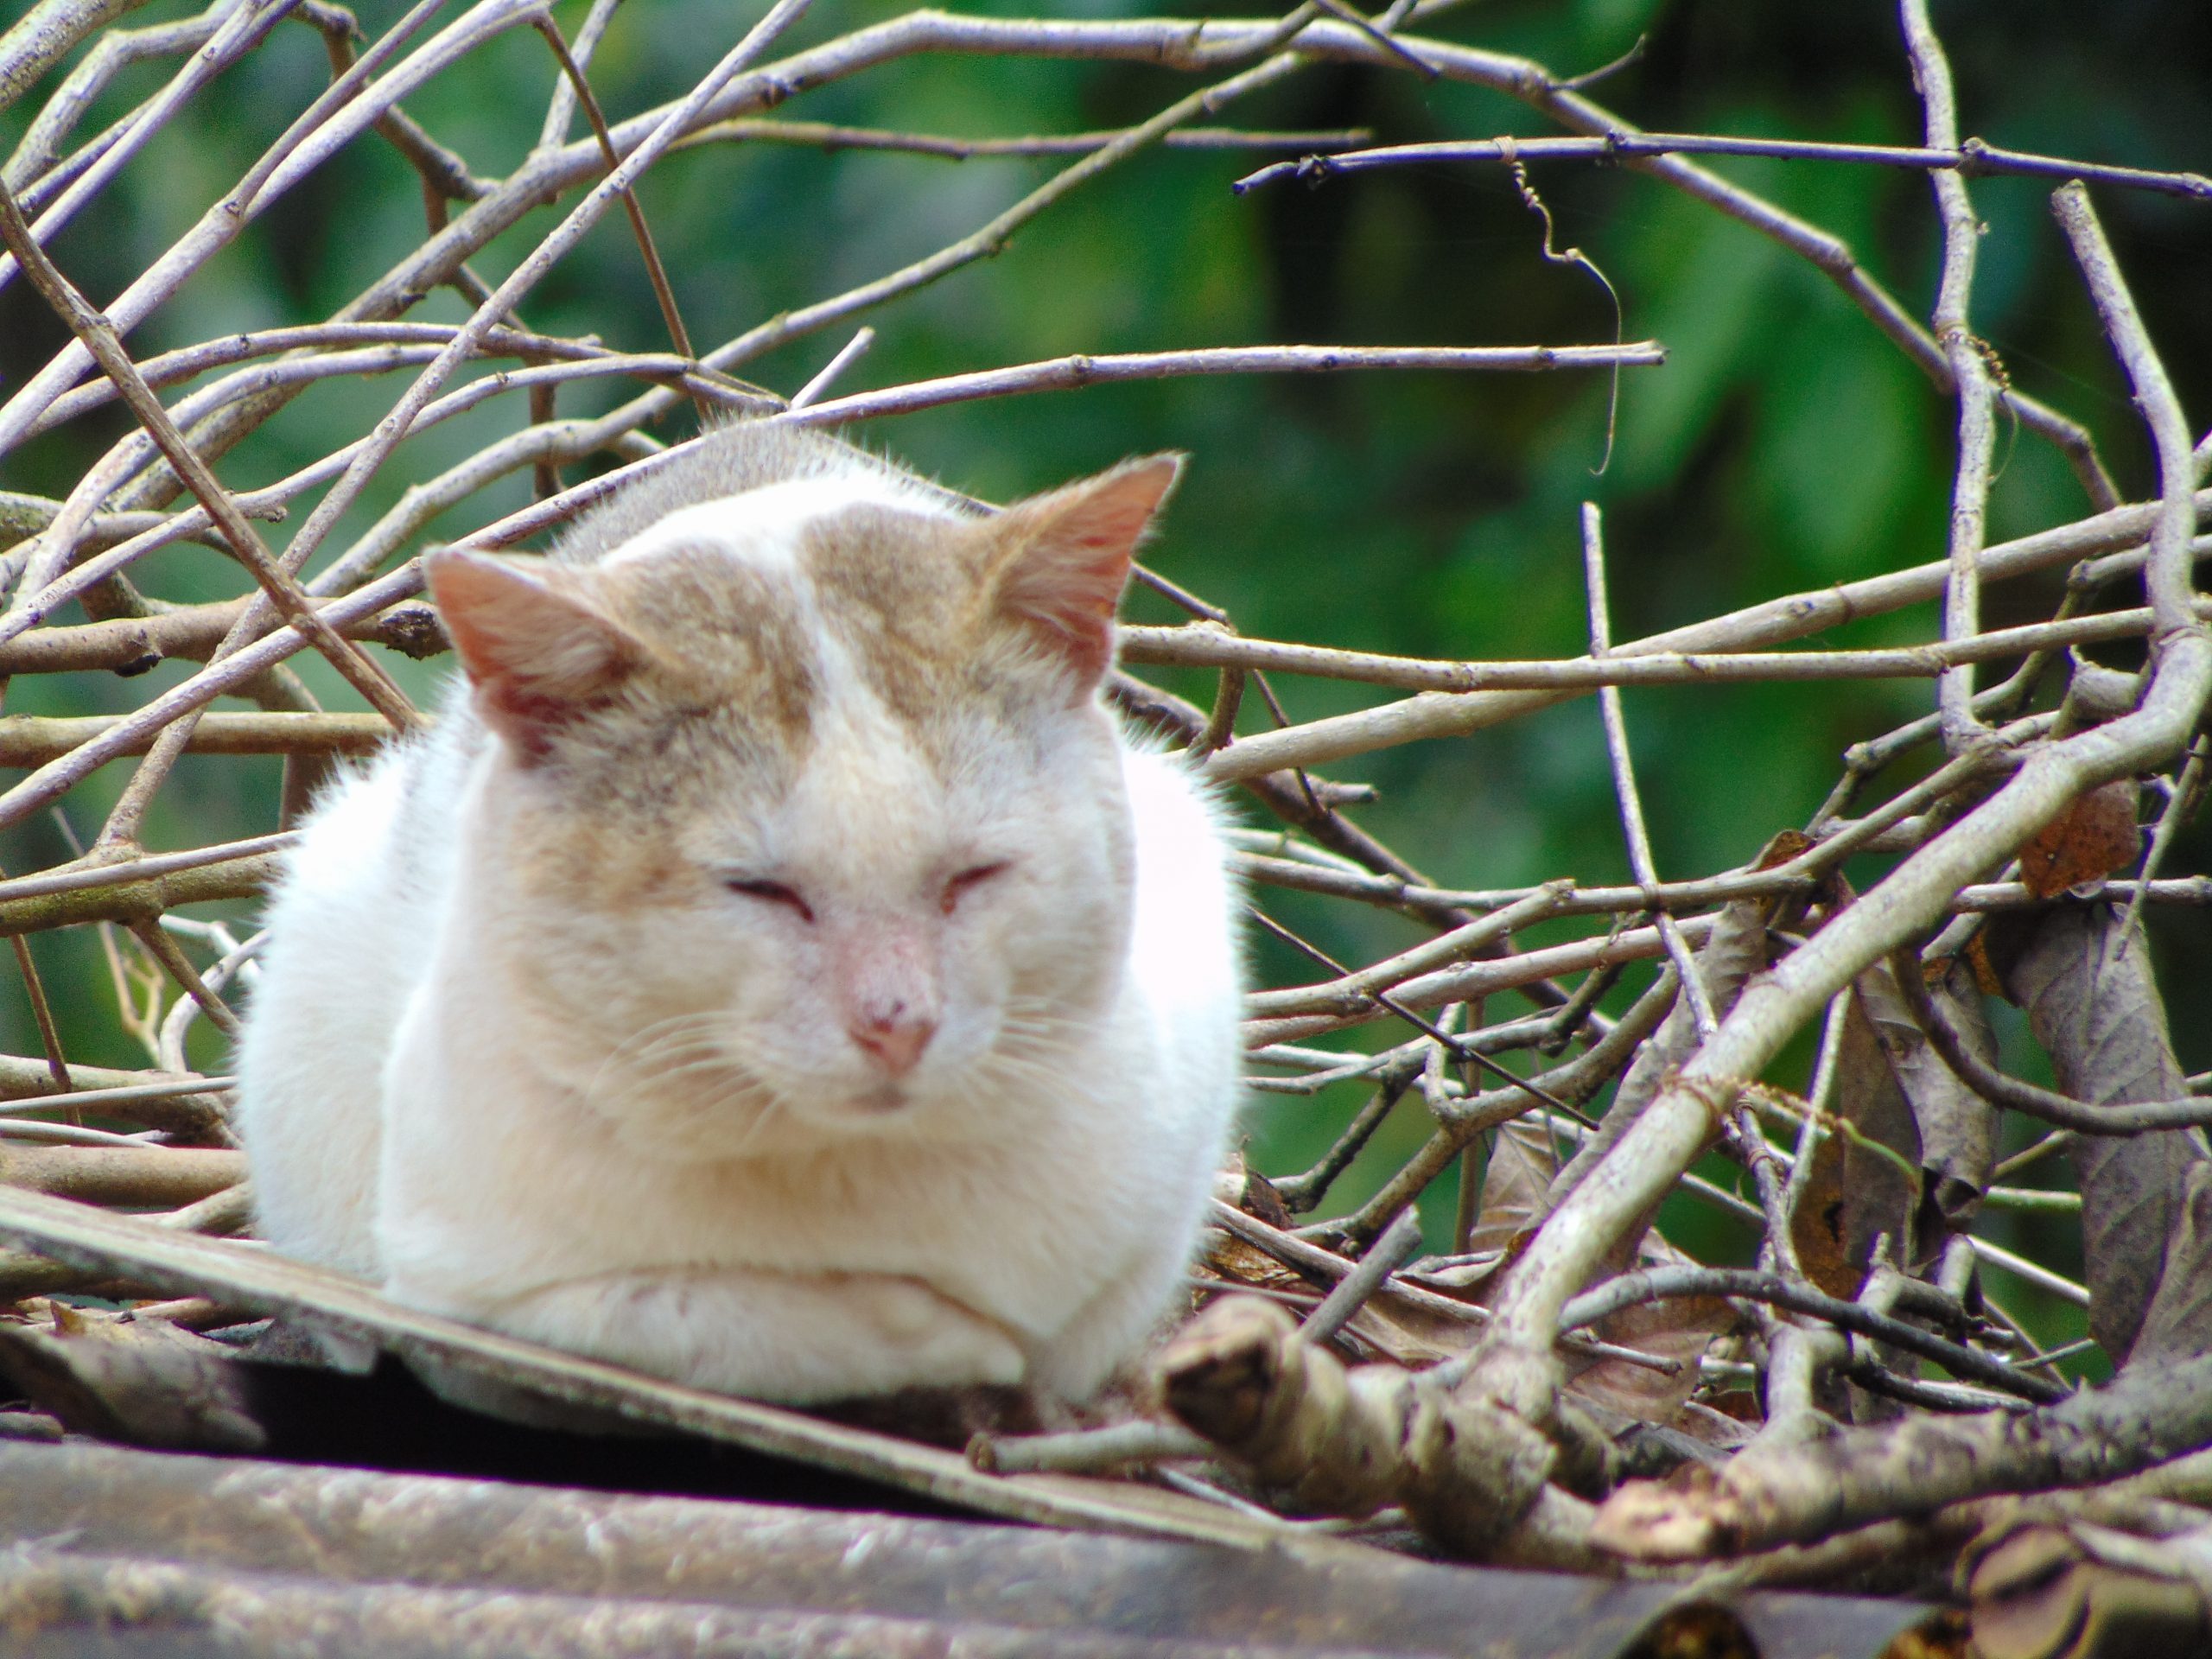 A sleeping cat on dry twigs